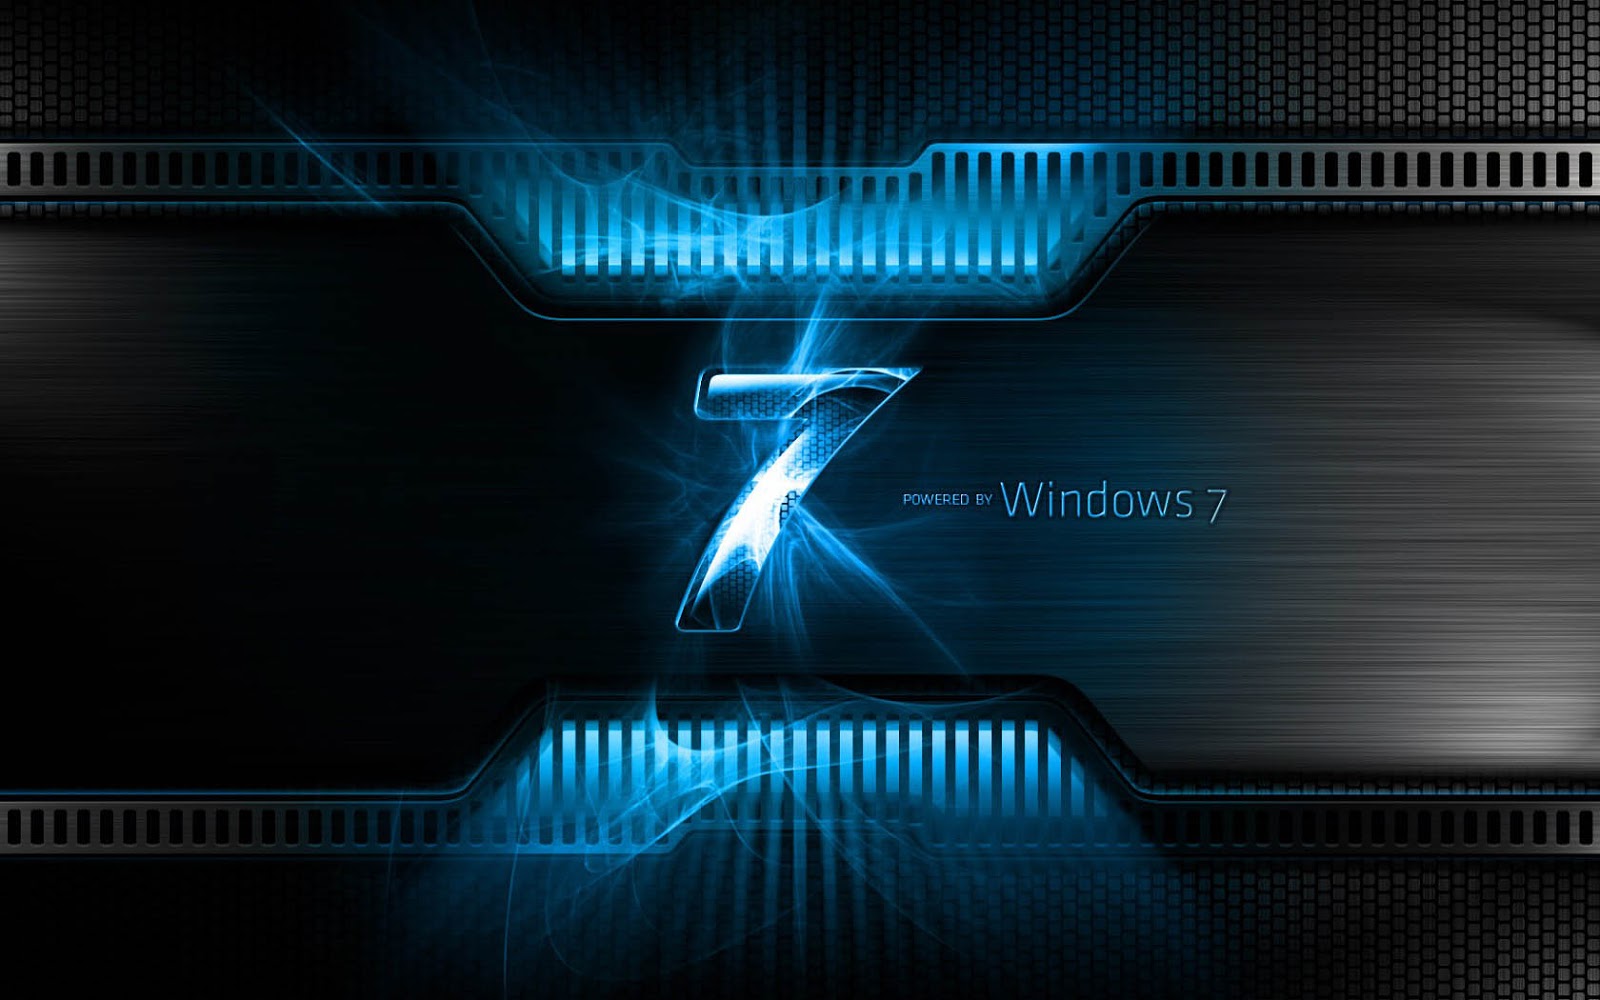 Windows 7 wallpapers | HD Wallpapers | Windows 7 New widescreen ...